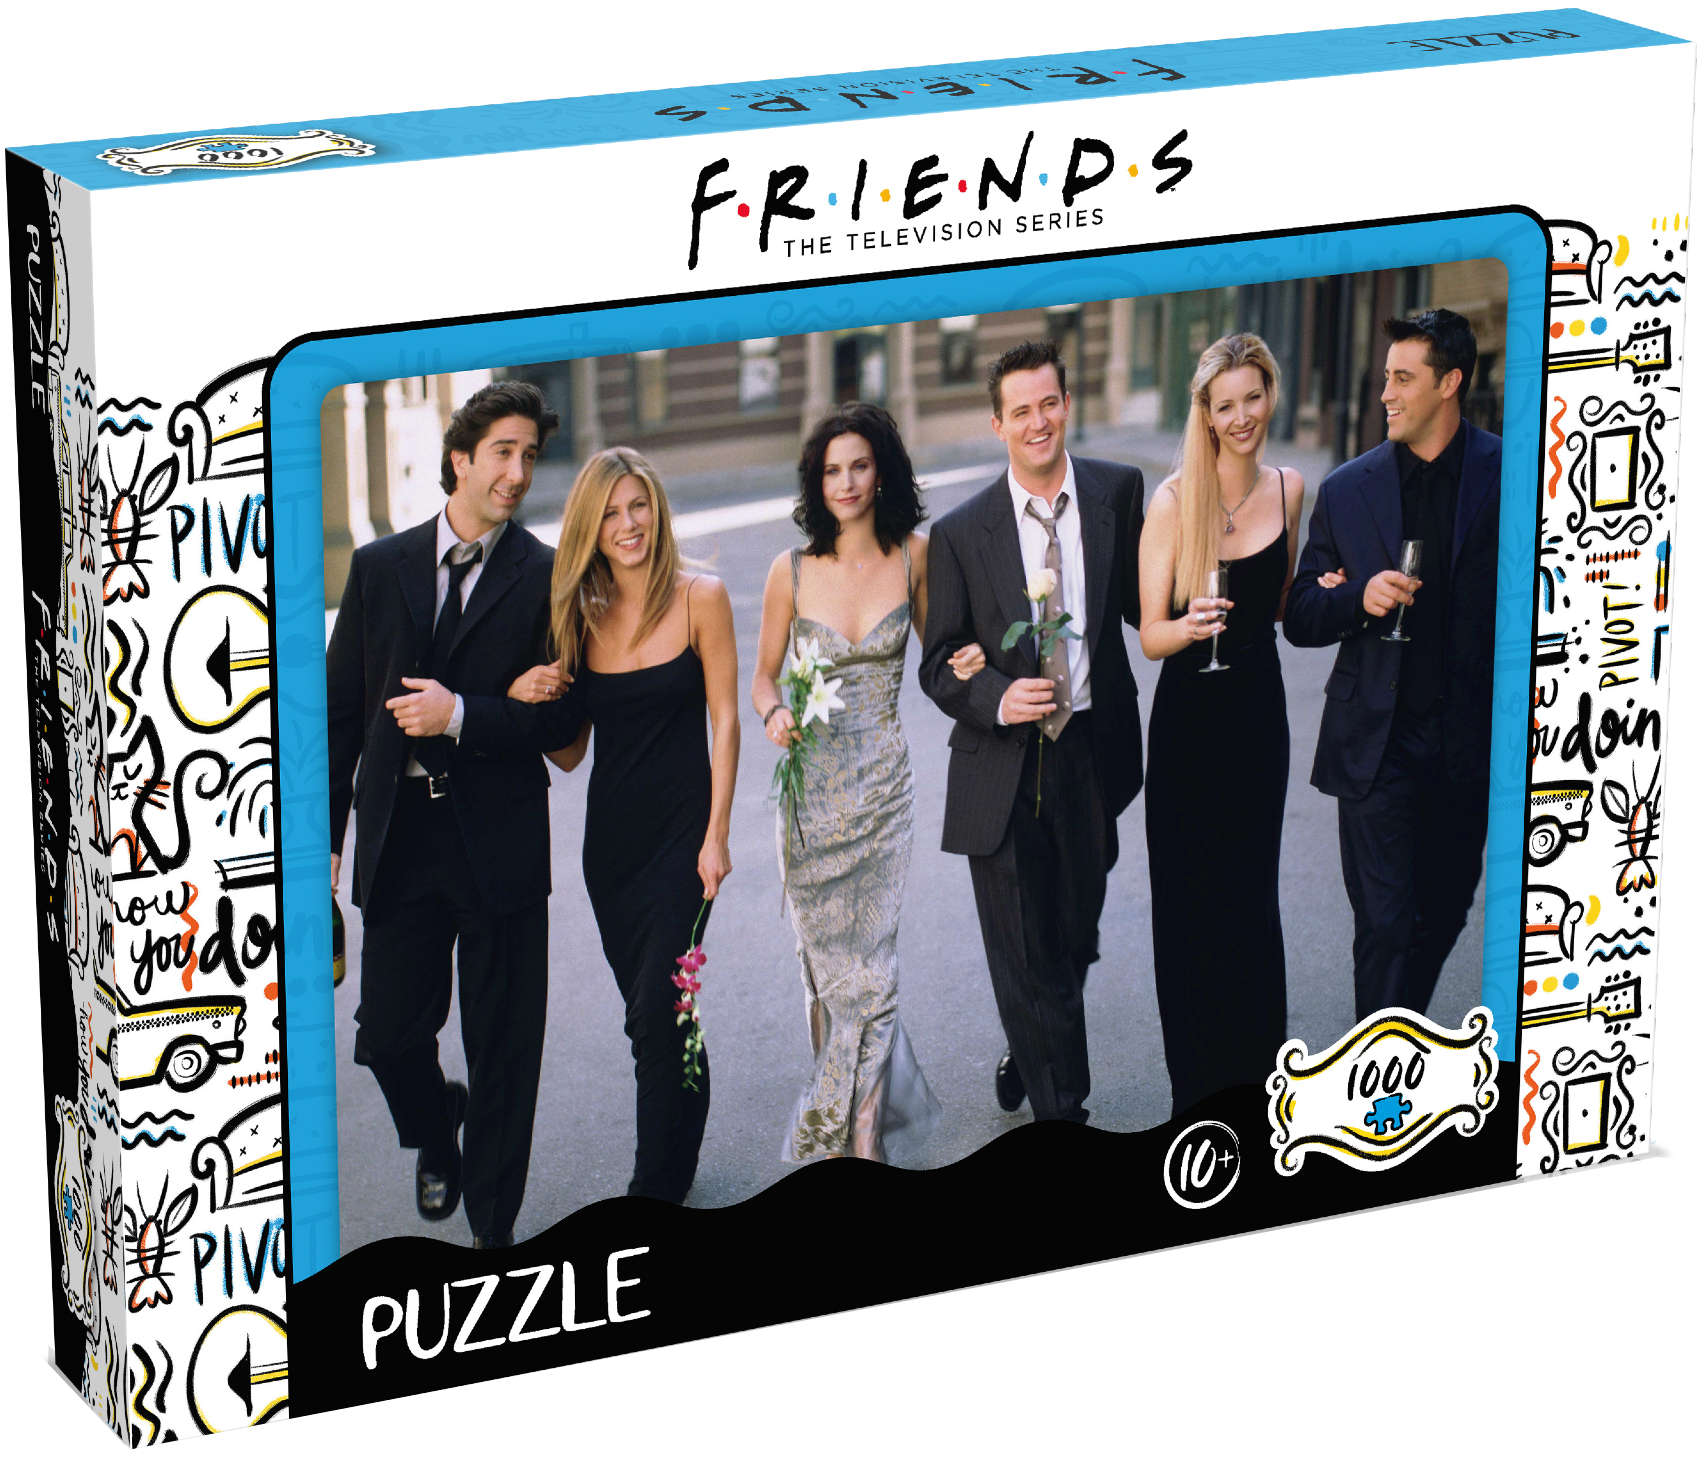 Winning Puzzle 1000 Friends Przyjaciele Banquet